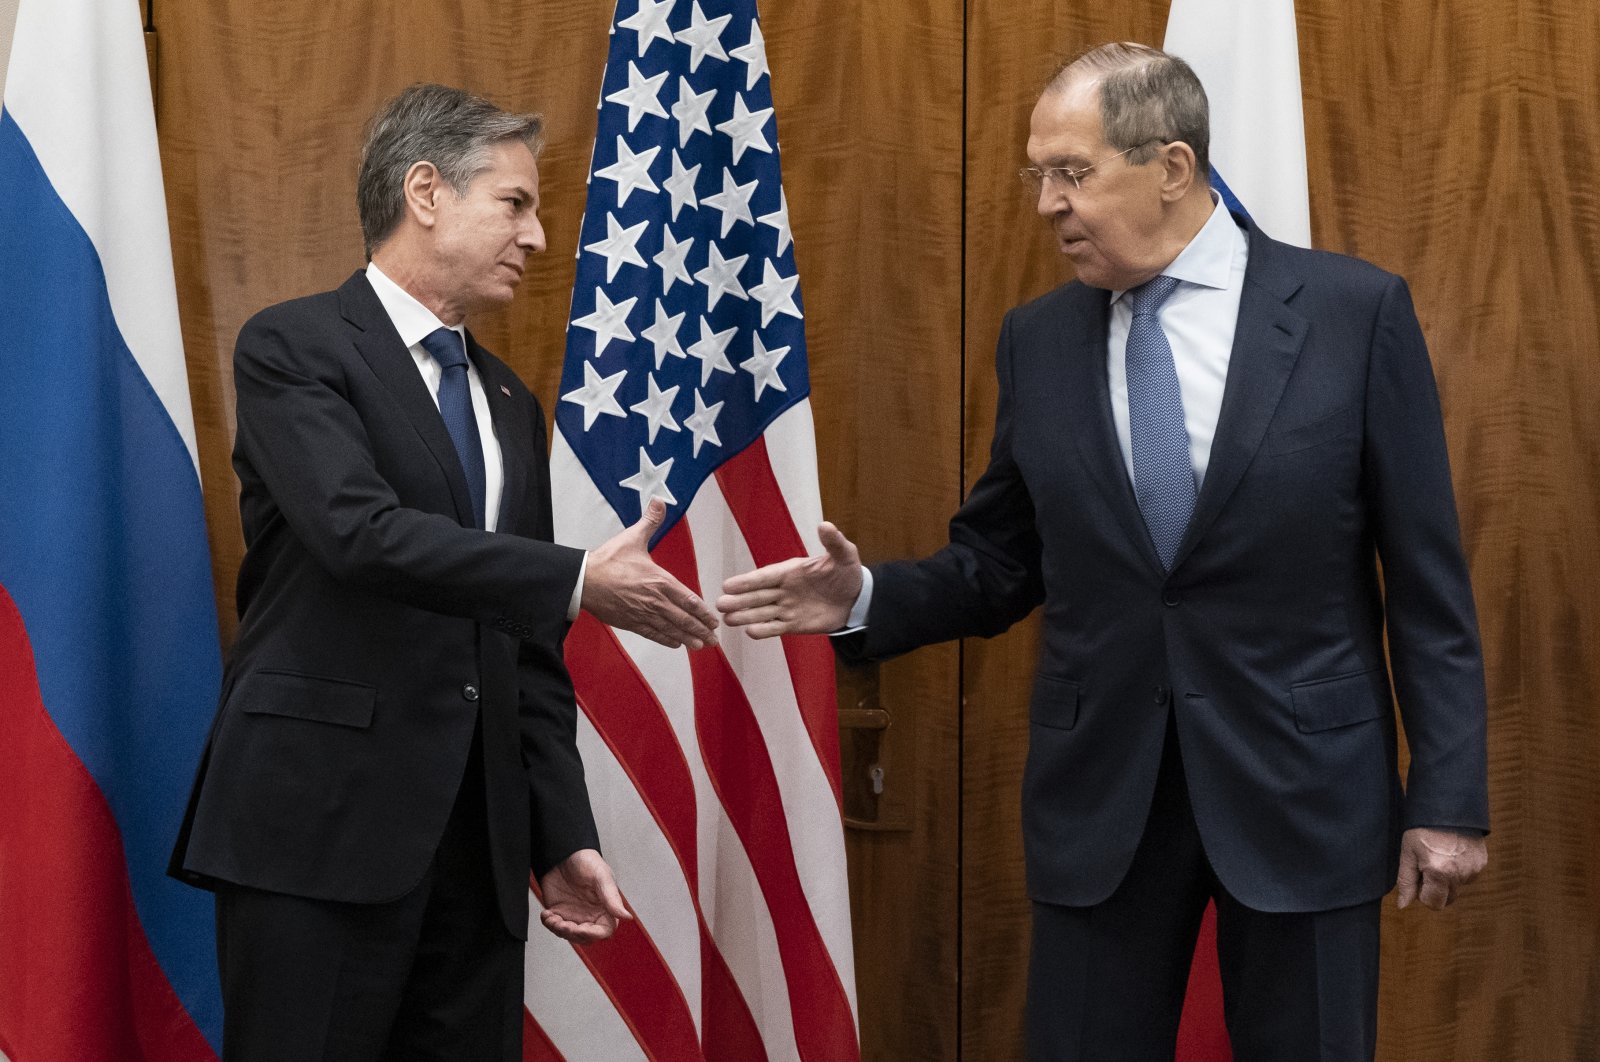 U.S. Secretary of State Antony Blinken, left, greets Russian Foreign Minister Sergey Lavrov before their meeting, in Geneva, Switzerland, Friday, Jan. 21, 2022. (AP Photo)